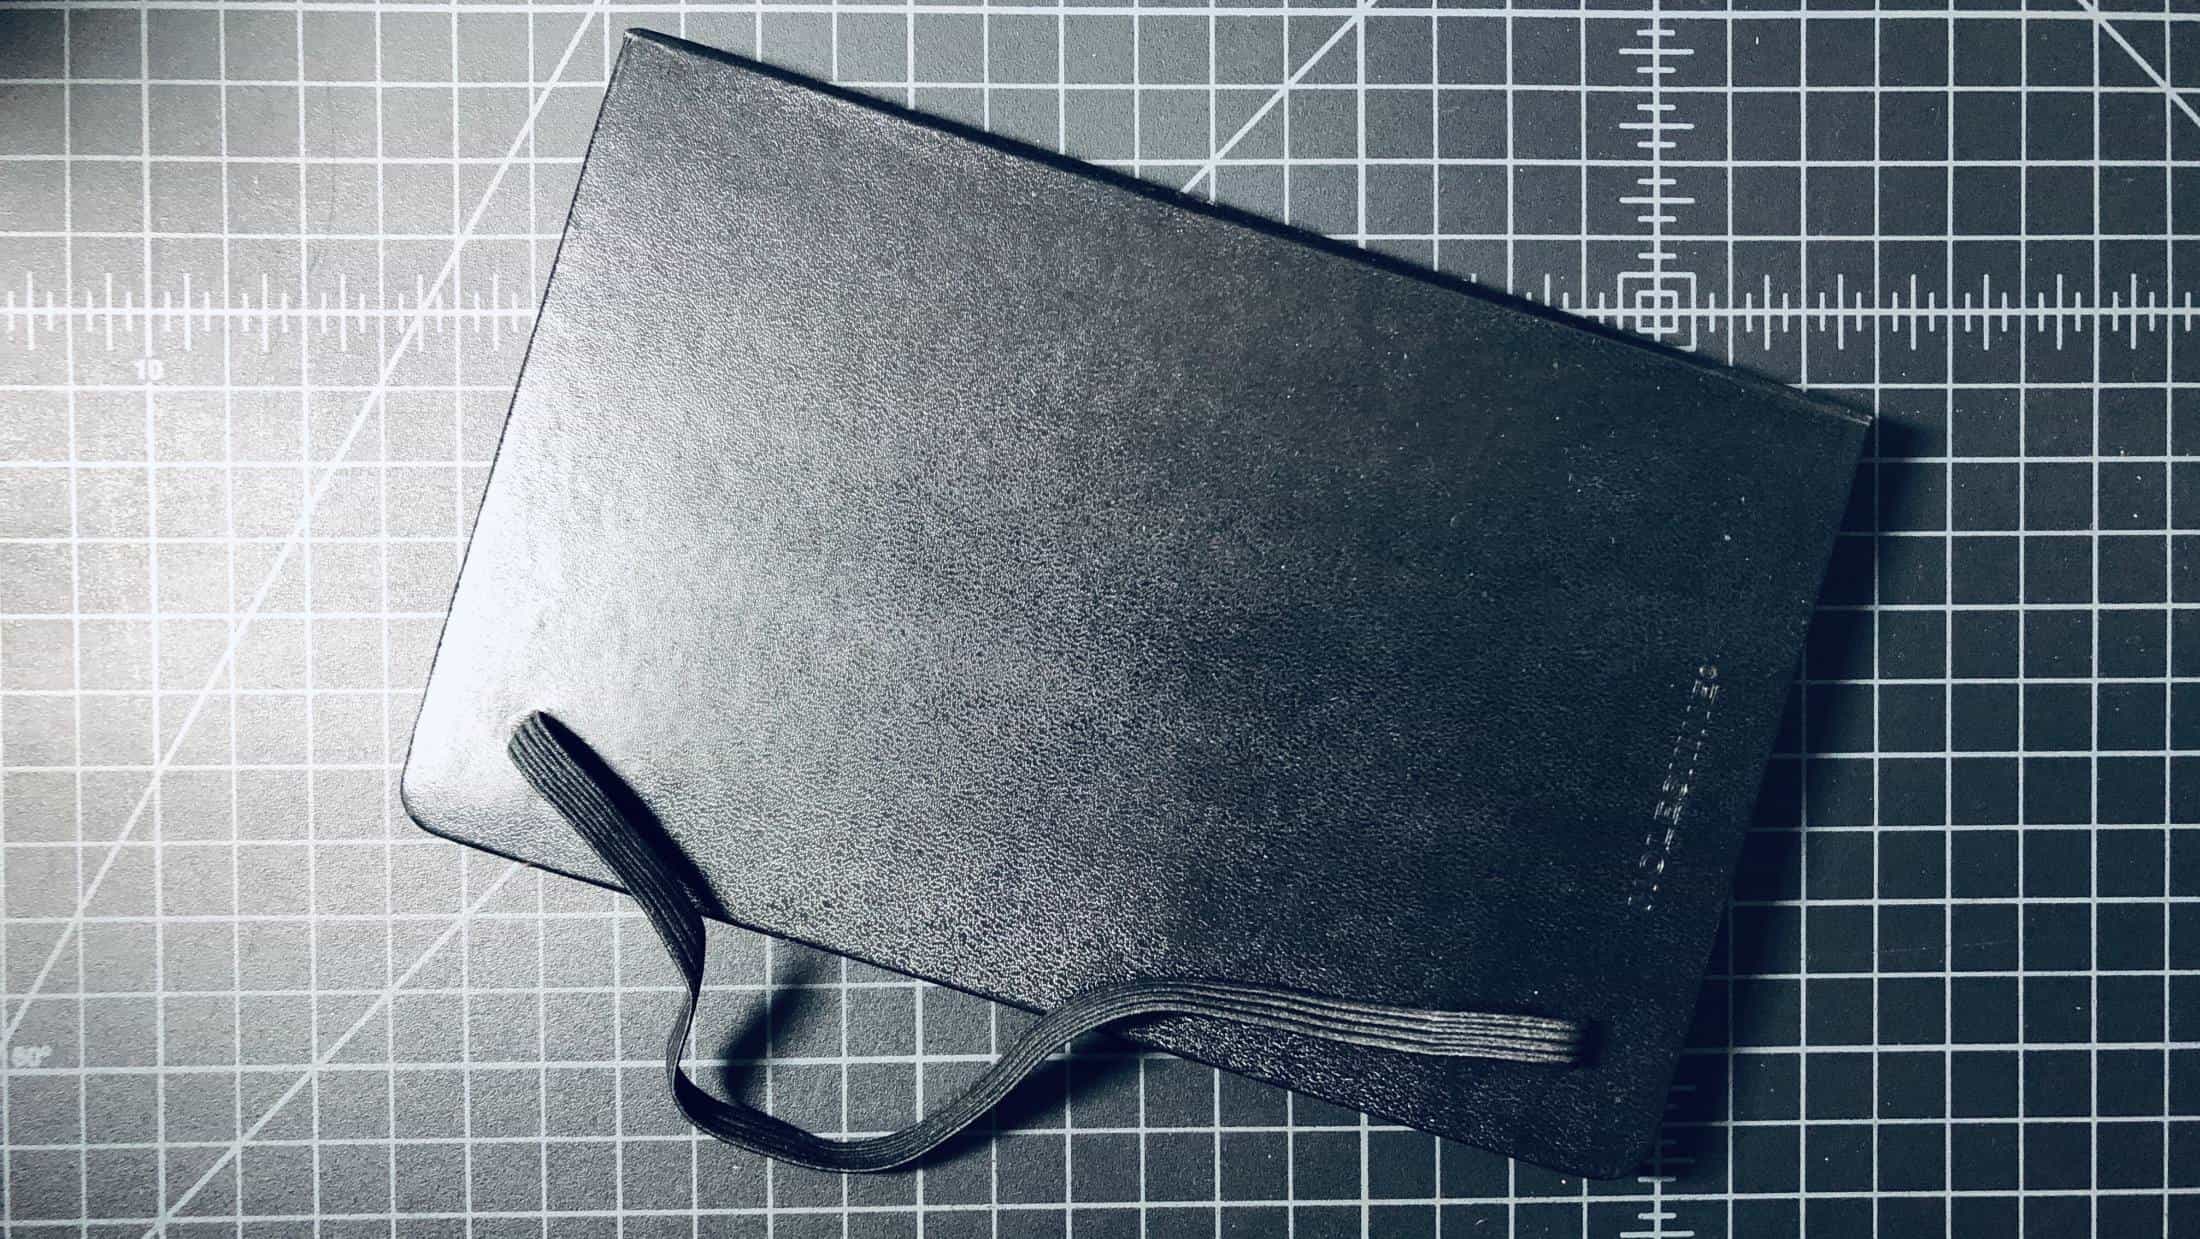 Moleskine Notebook, XXL, Ruled, Black Soft Cover (8.5 x 11) by Moleskine